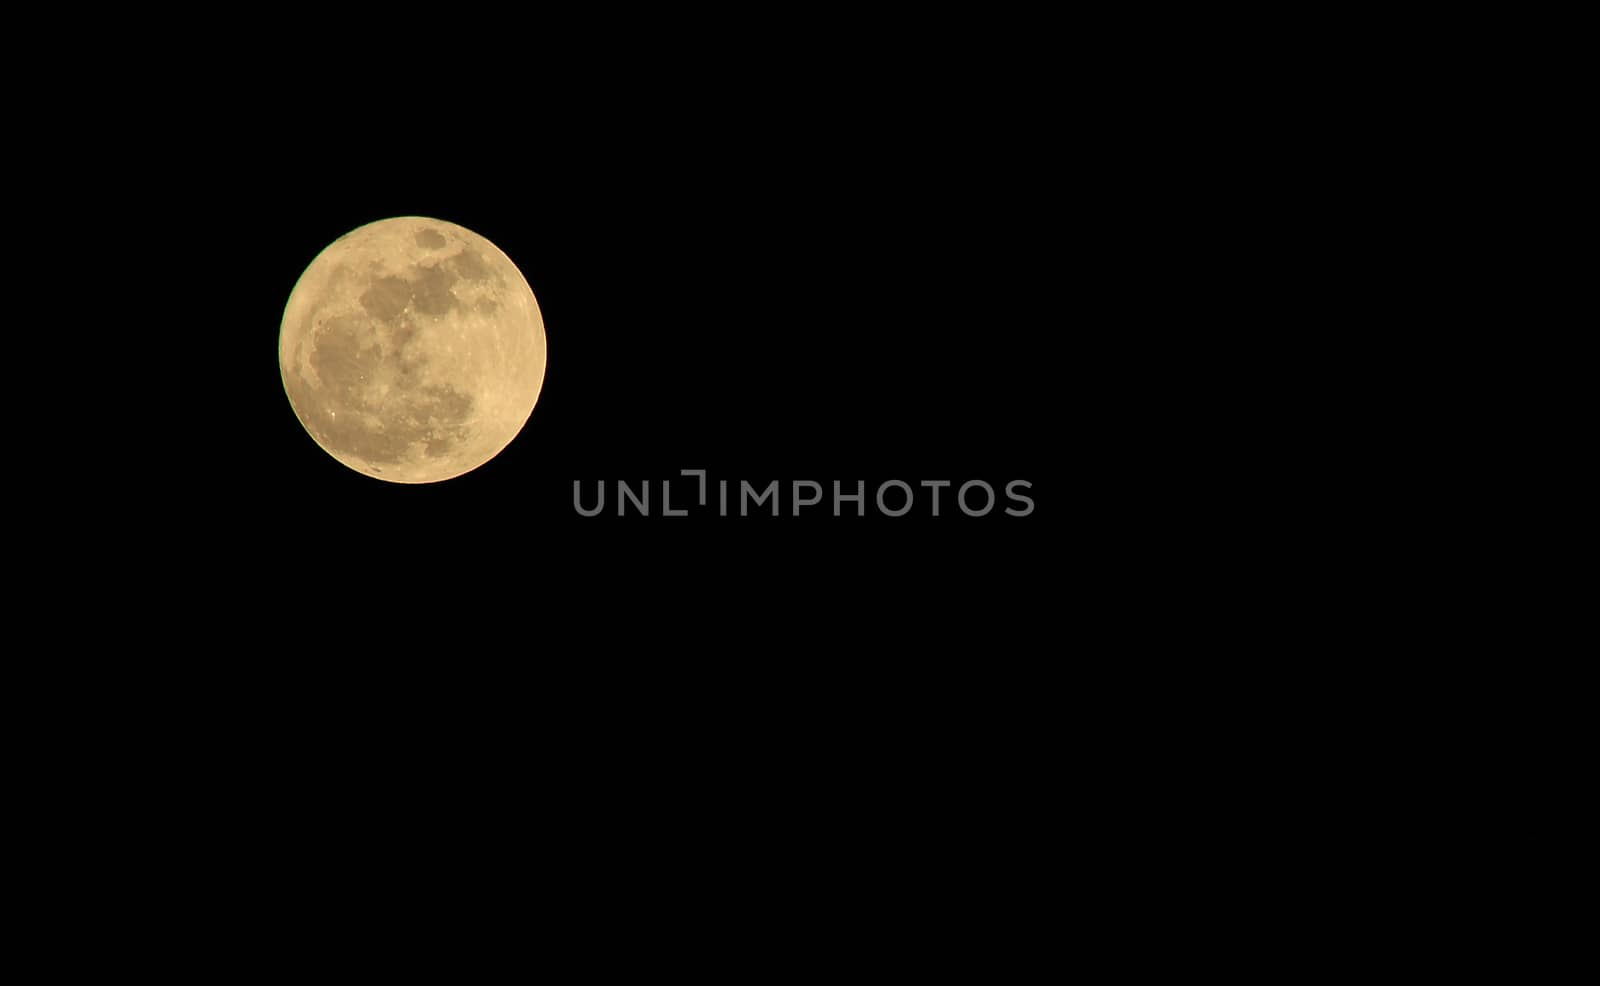 The big moon in the dark night by Puripatt